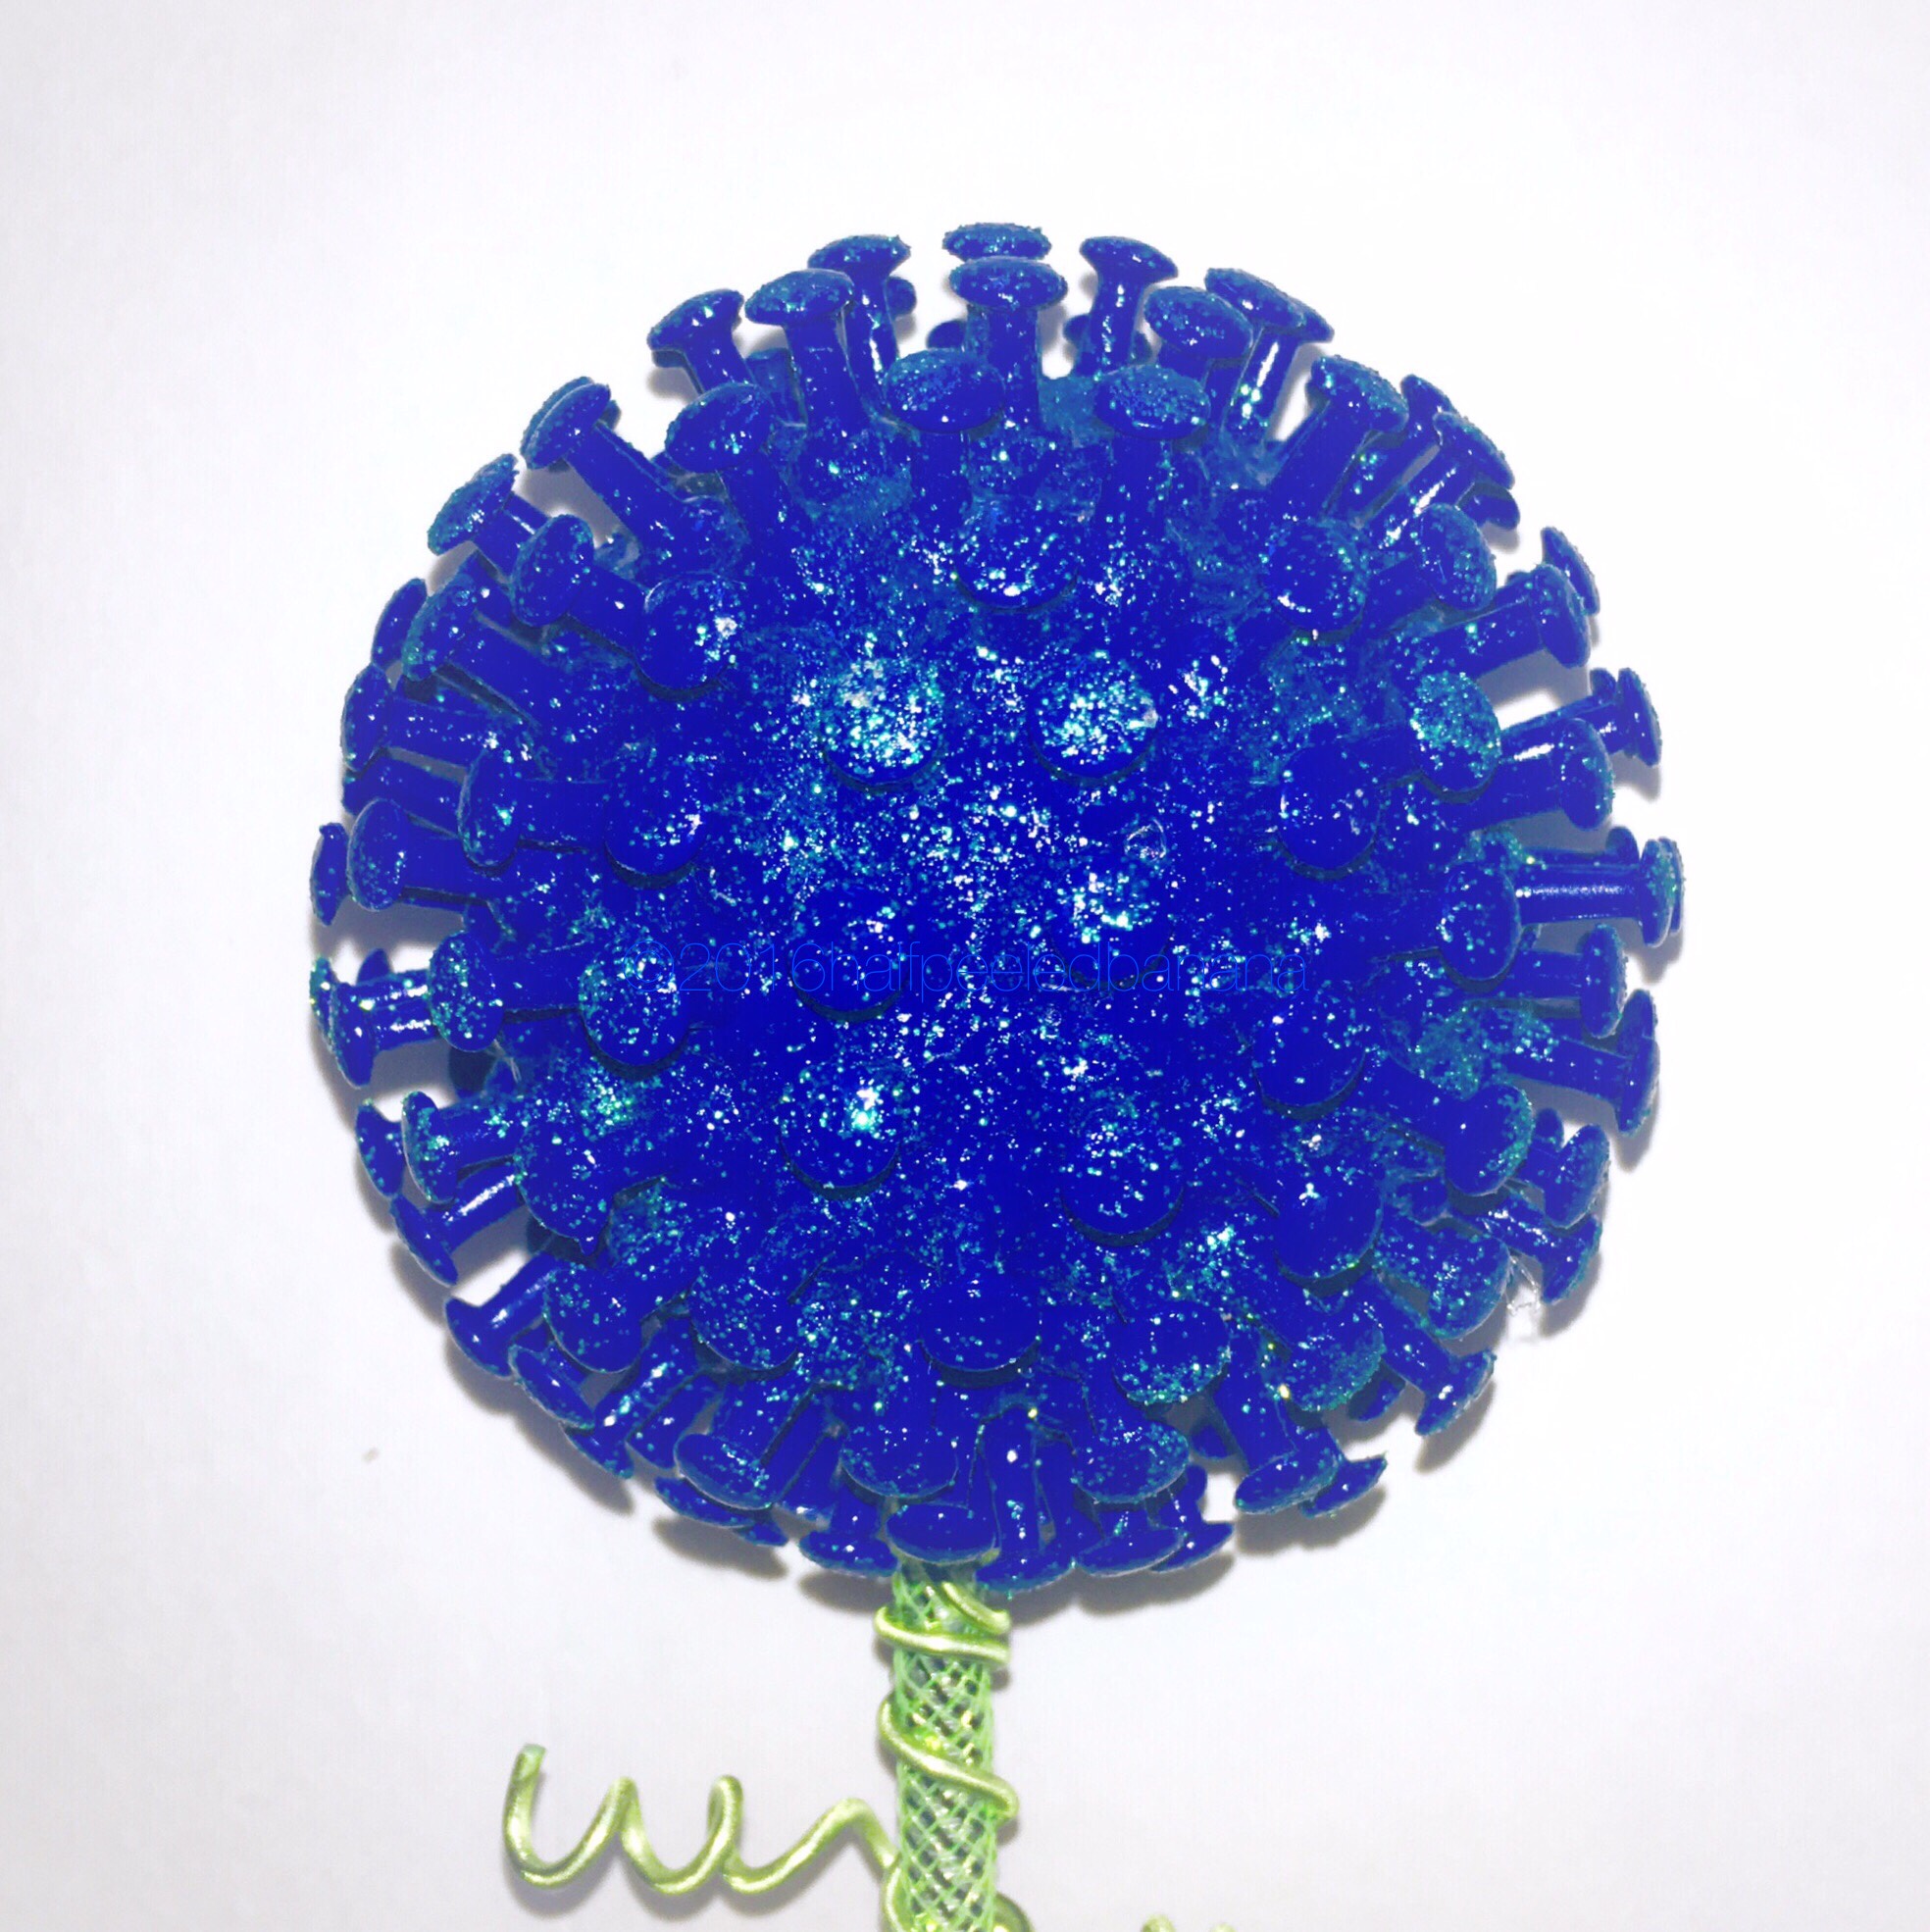 my boy blue - 4" garden art blue flower pins style